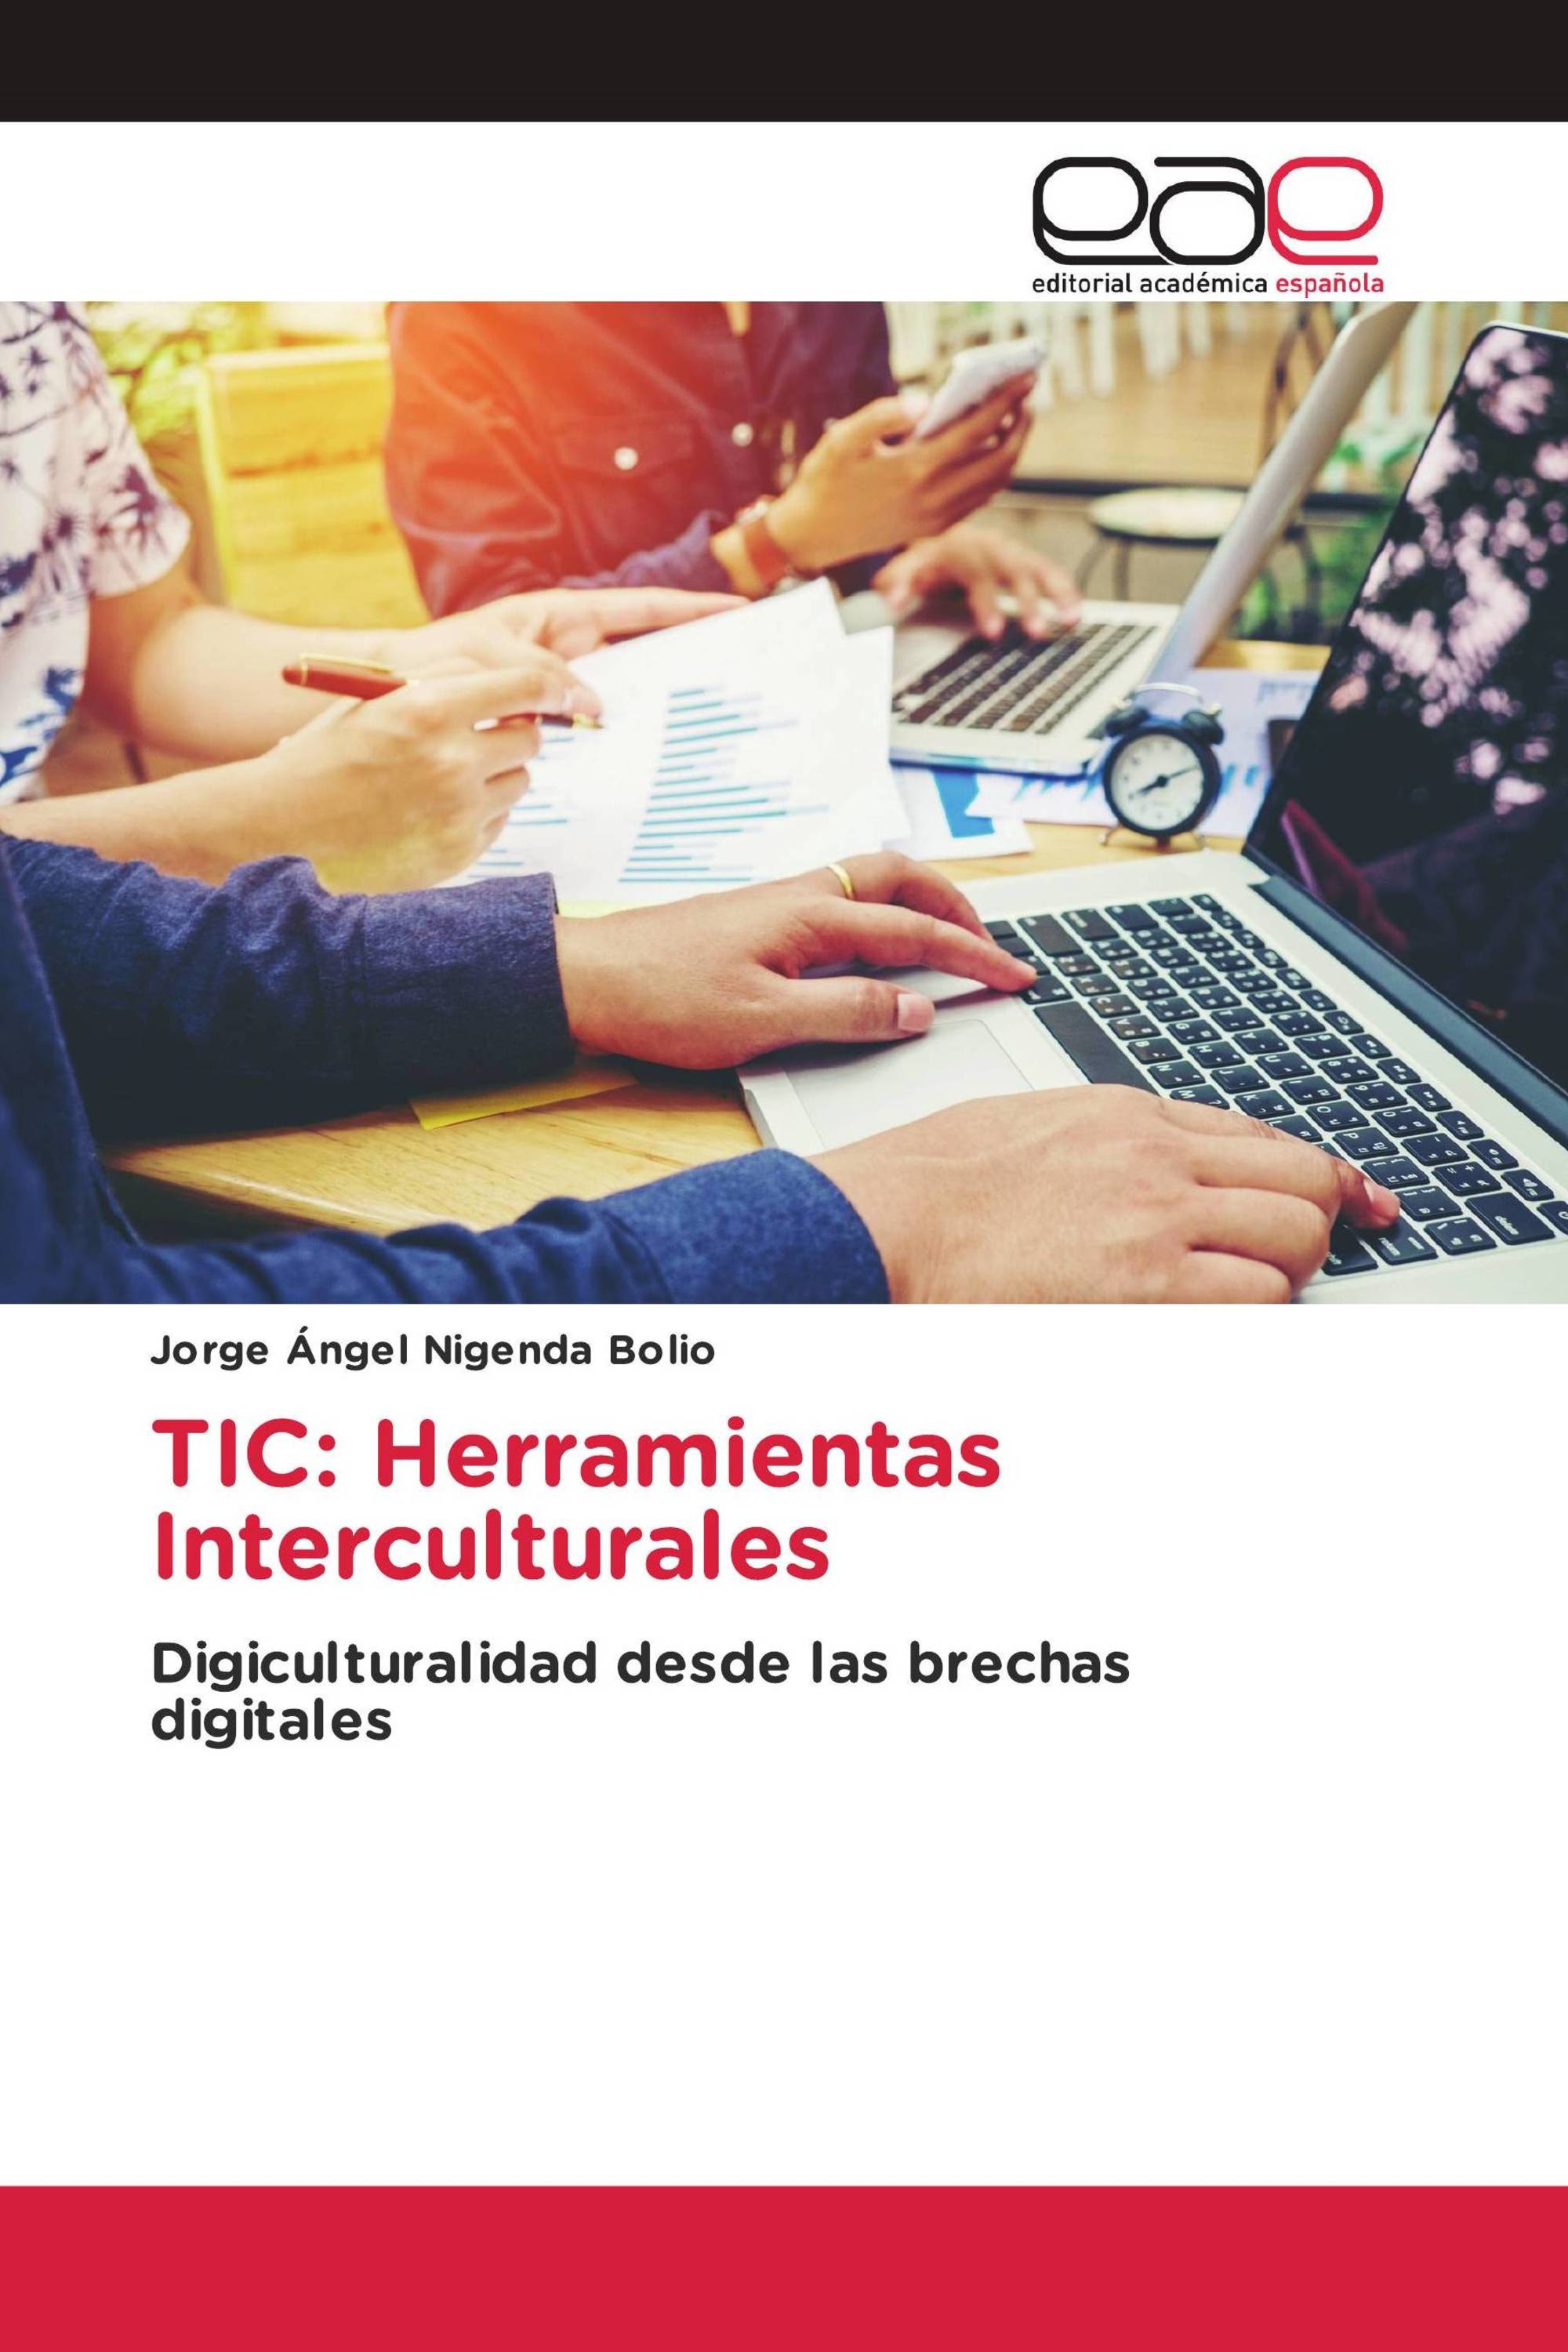 TIC: Herramientas Interculturales